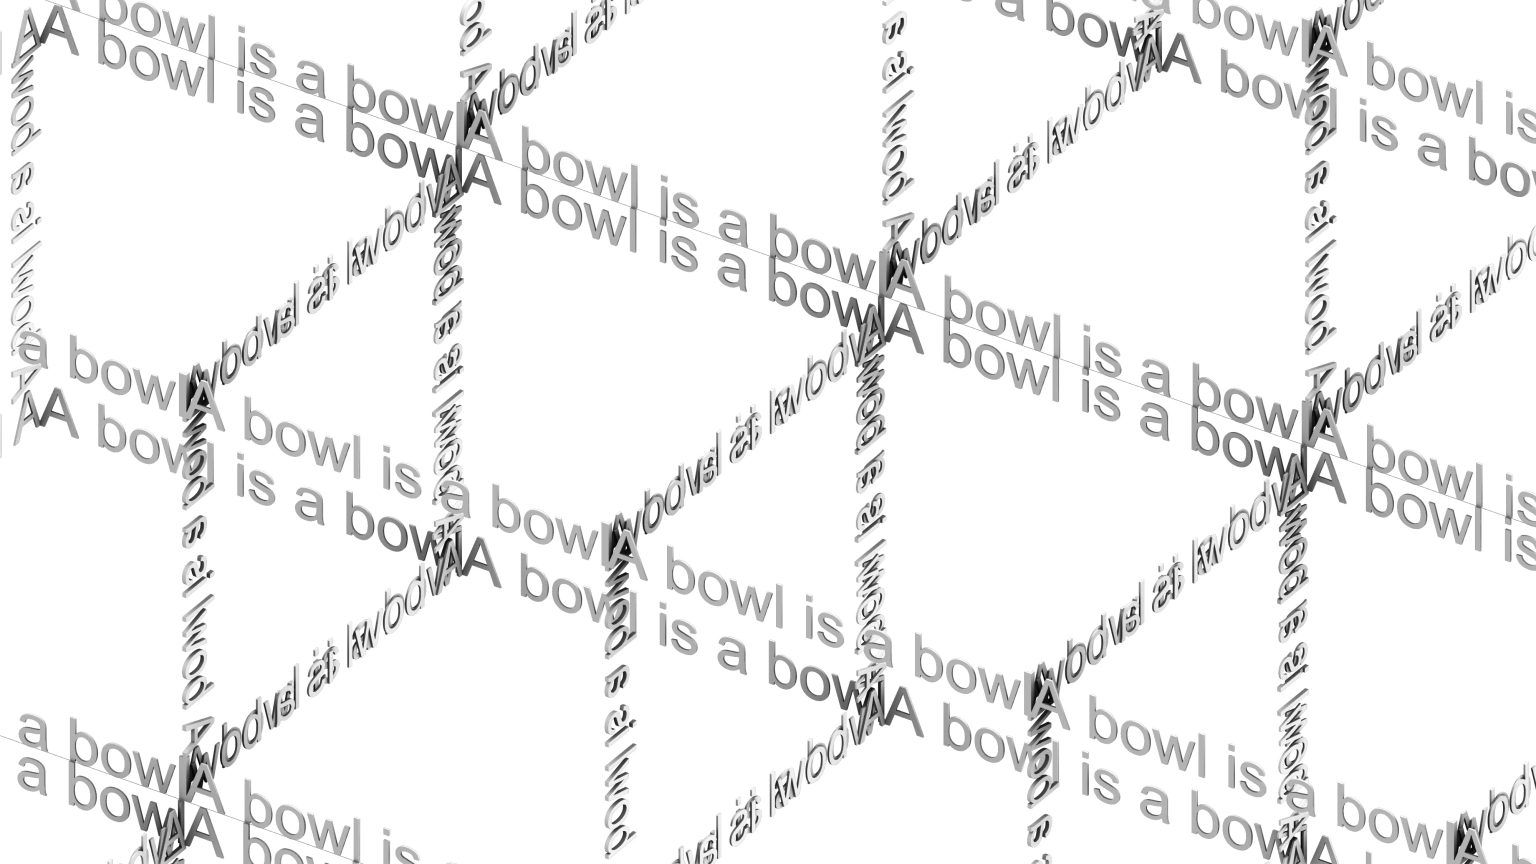 A-bowl-is-a-bowl-images-10